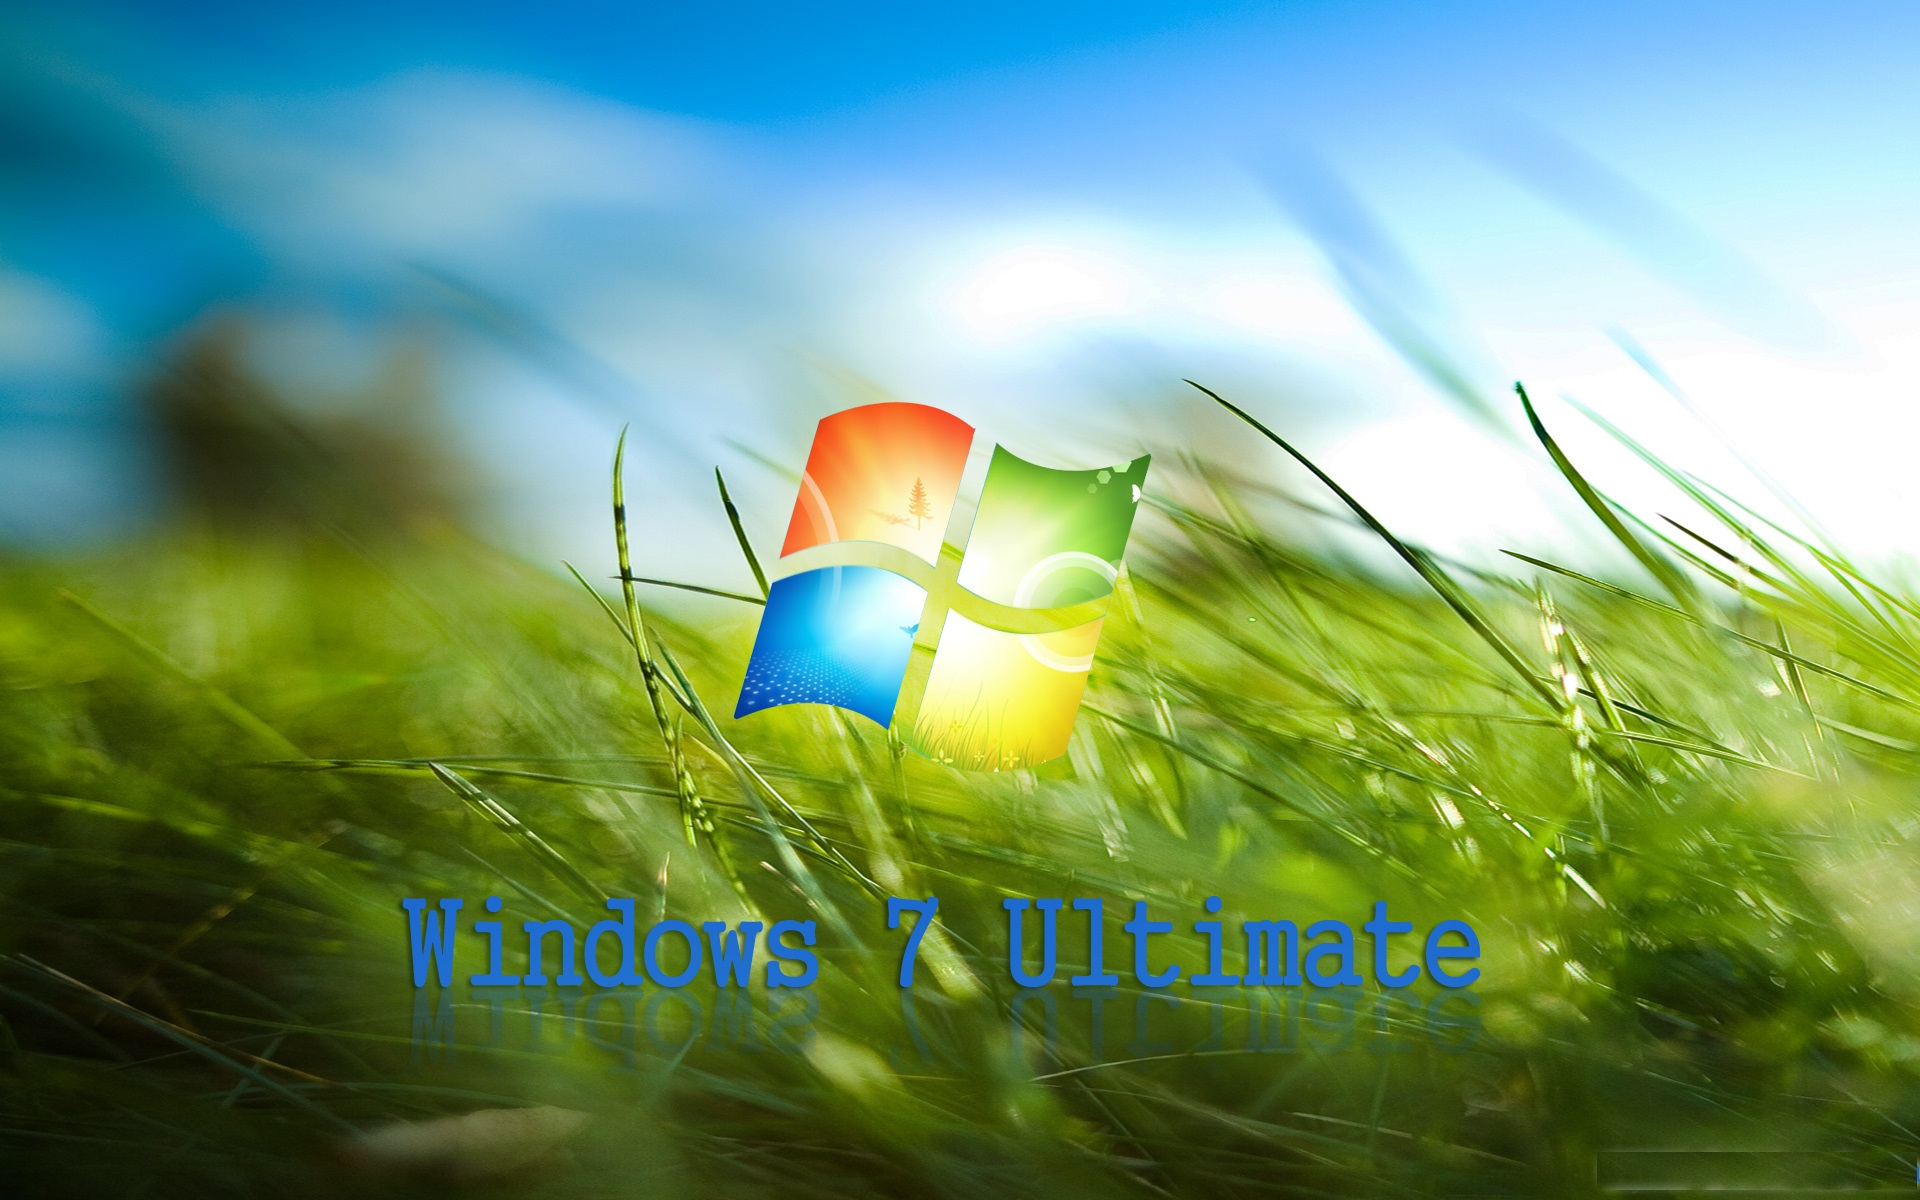 Windows Ultimate HD Wallpaper Image New